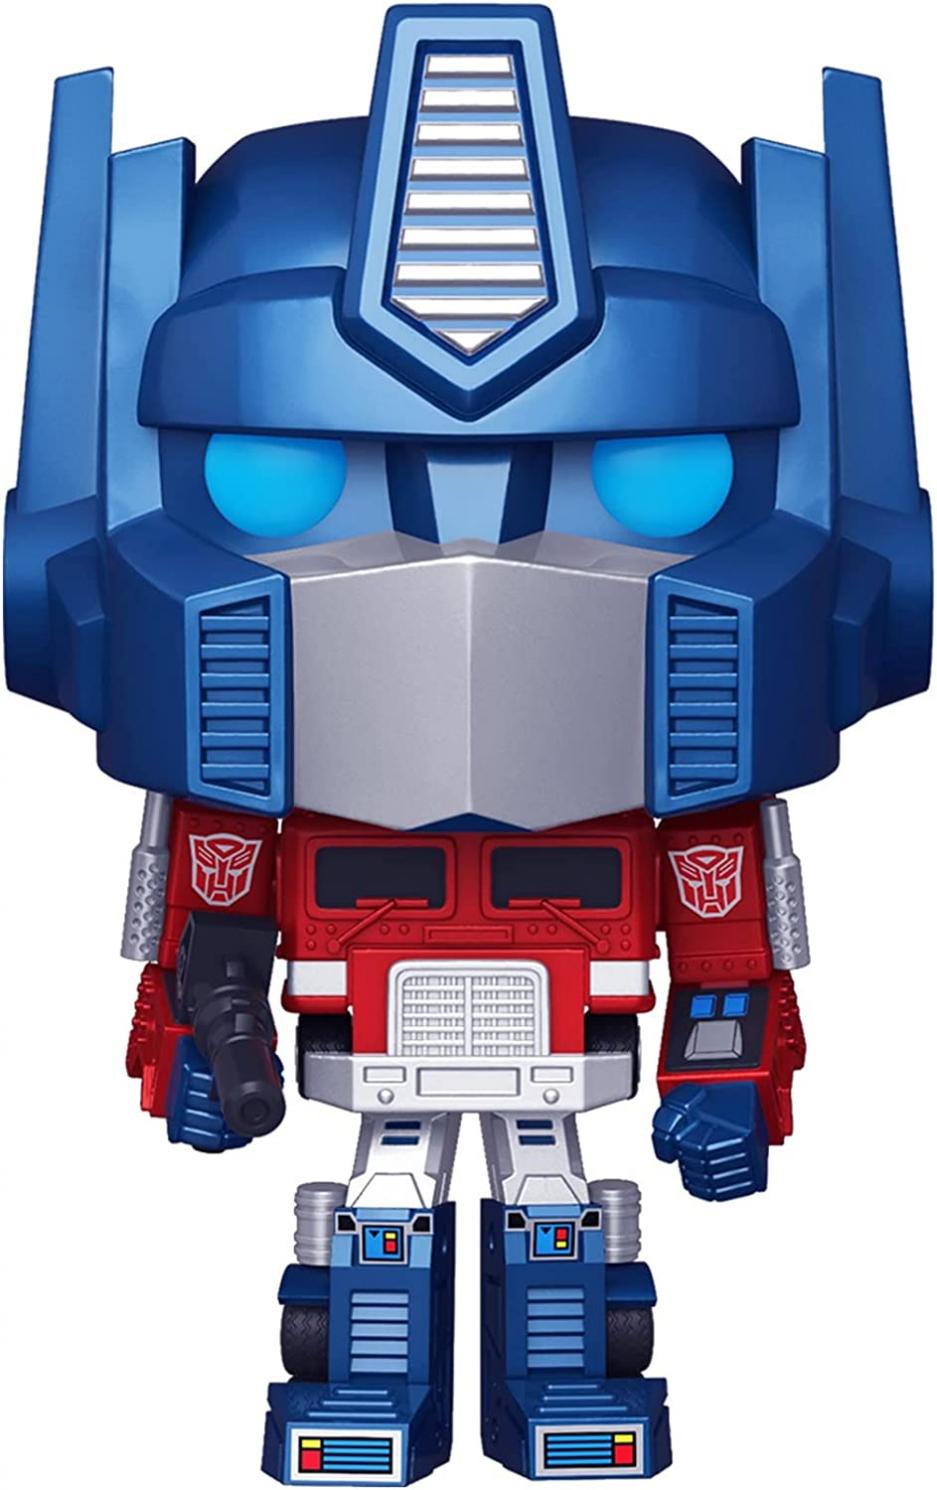 Funko Pop! Retro Toys: Transformers - Metallic Optimus Prime Amazon Exclusive, 3.75 inches